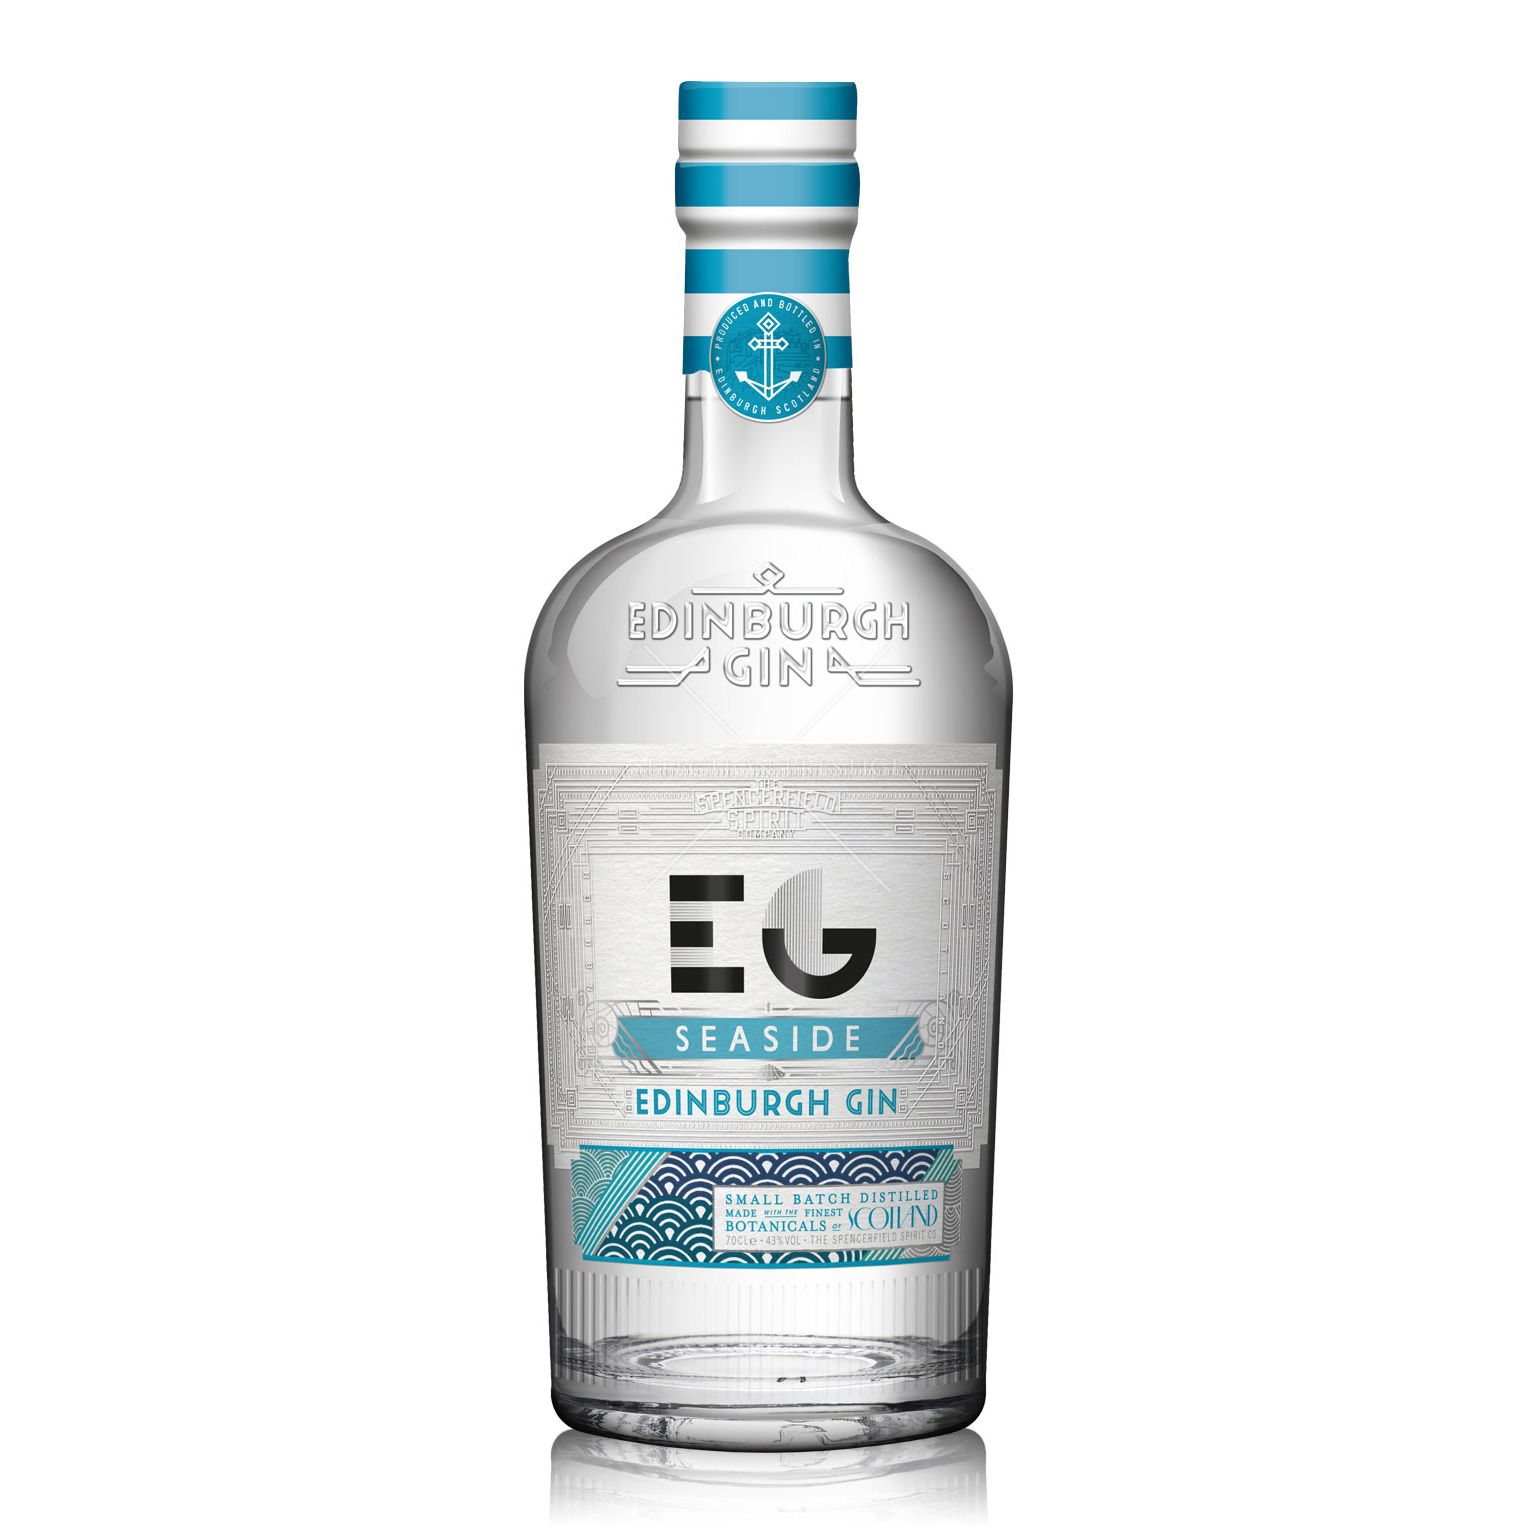 Джин Edinburgh Gin Seaside Gin, 43%, 0,7л - фото 1